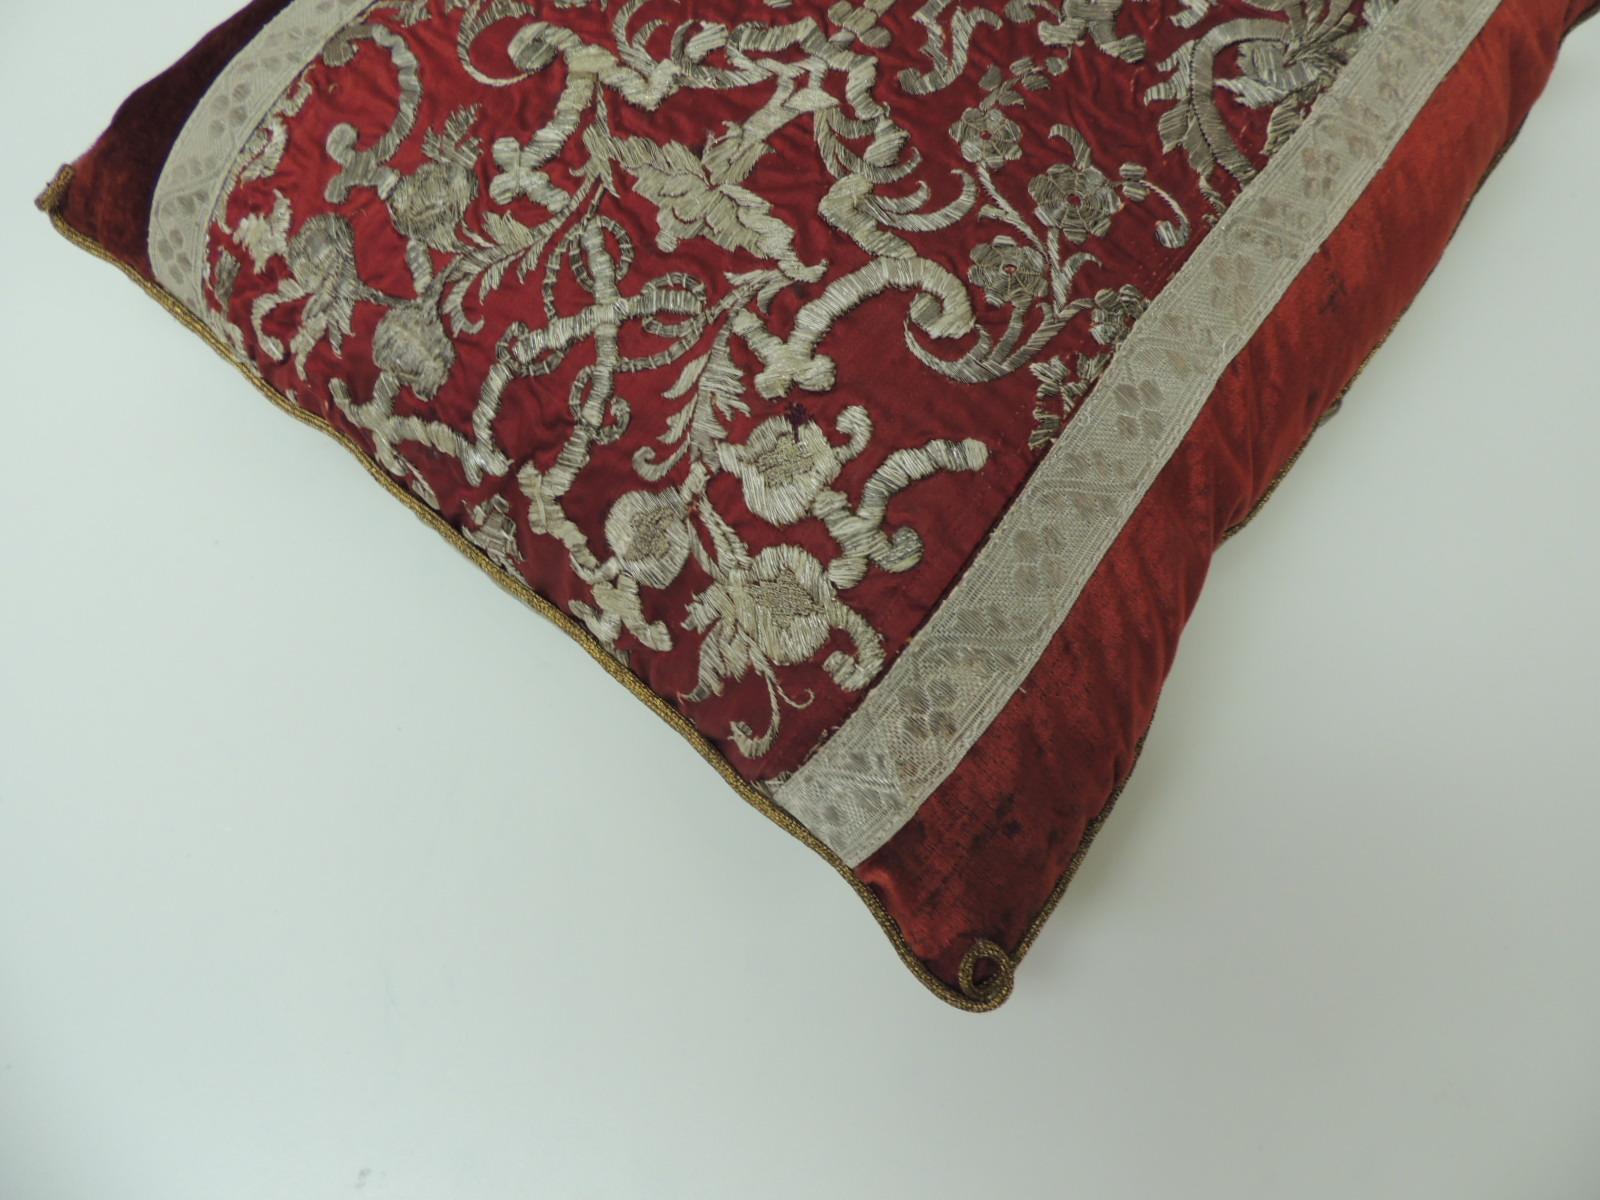 Moorish 19th Century Metallic Threads Embroidery Lumbar Decorative Pillow